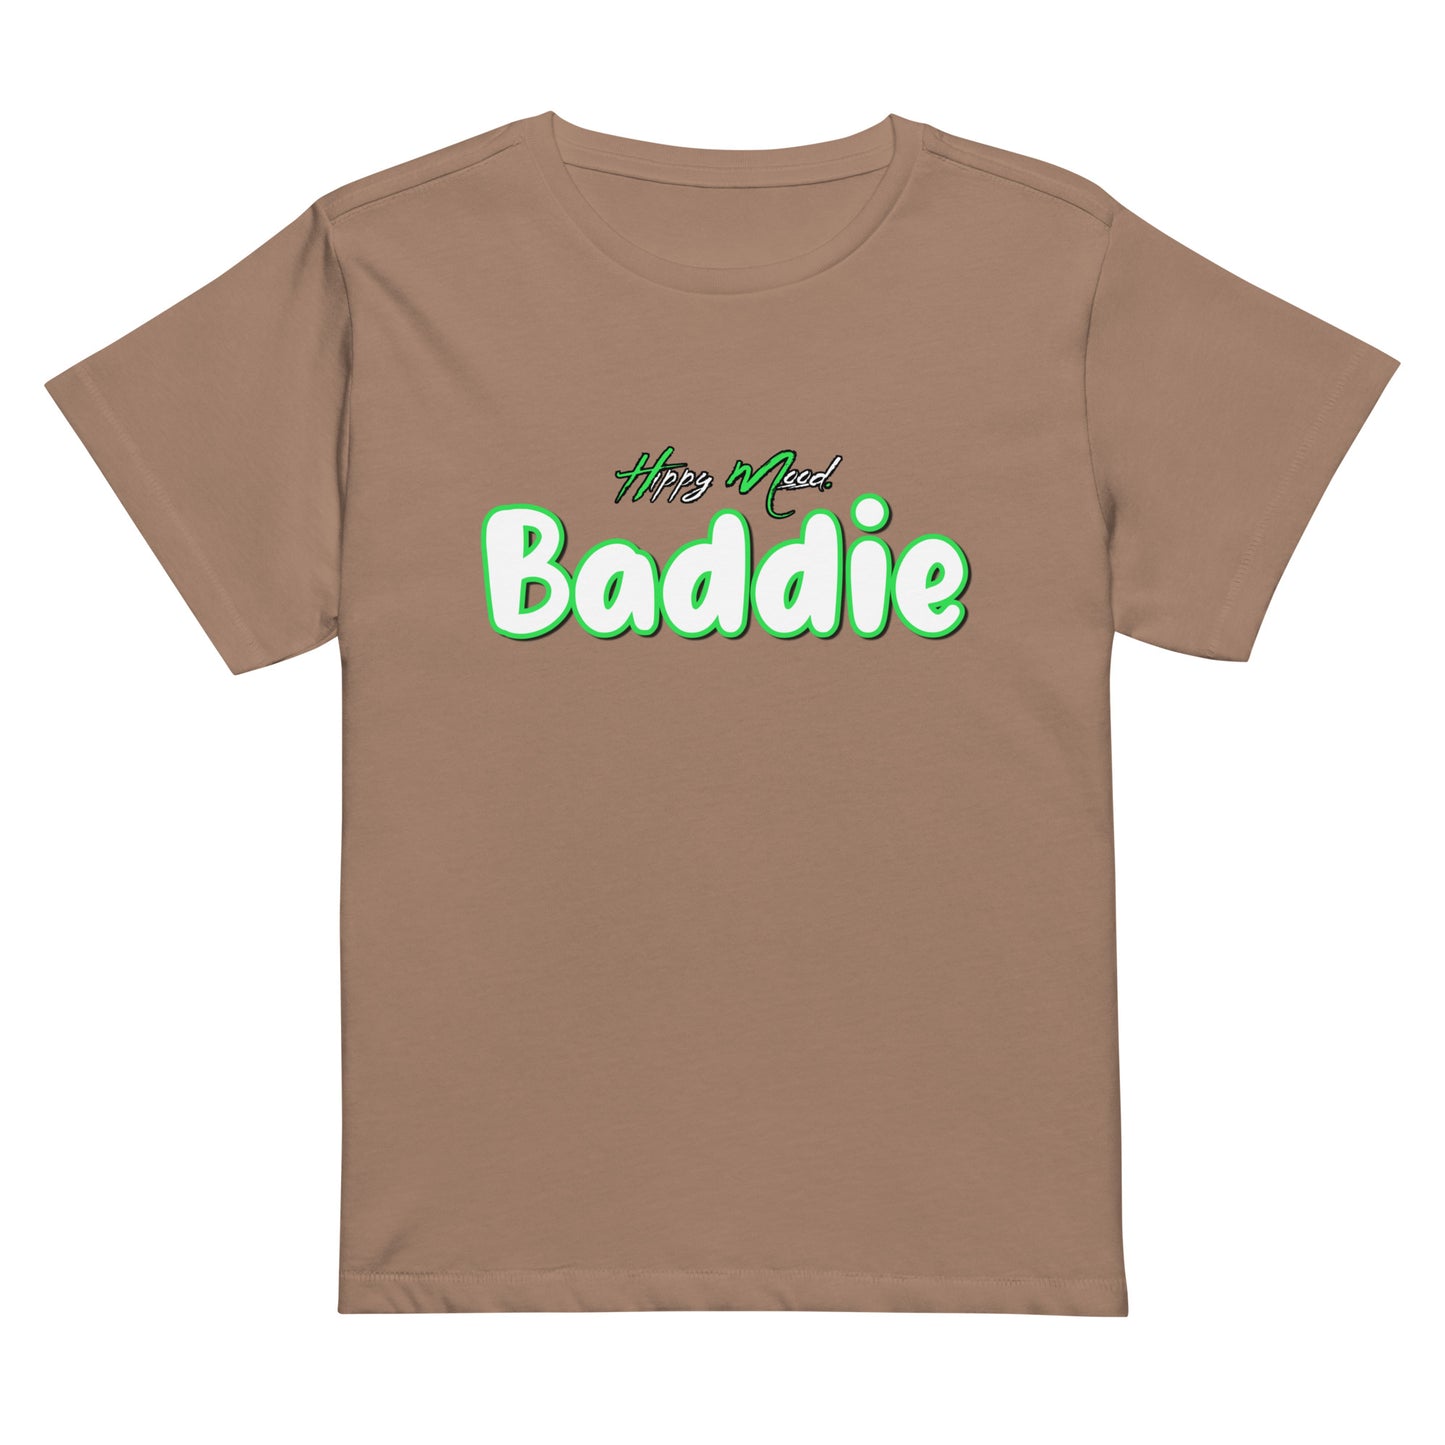 Hippy Mood Baddie | Women’s high-waisted t-shirt